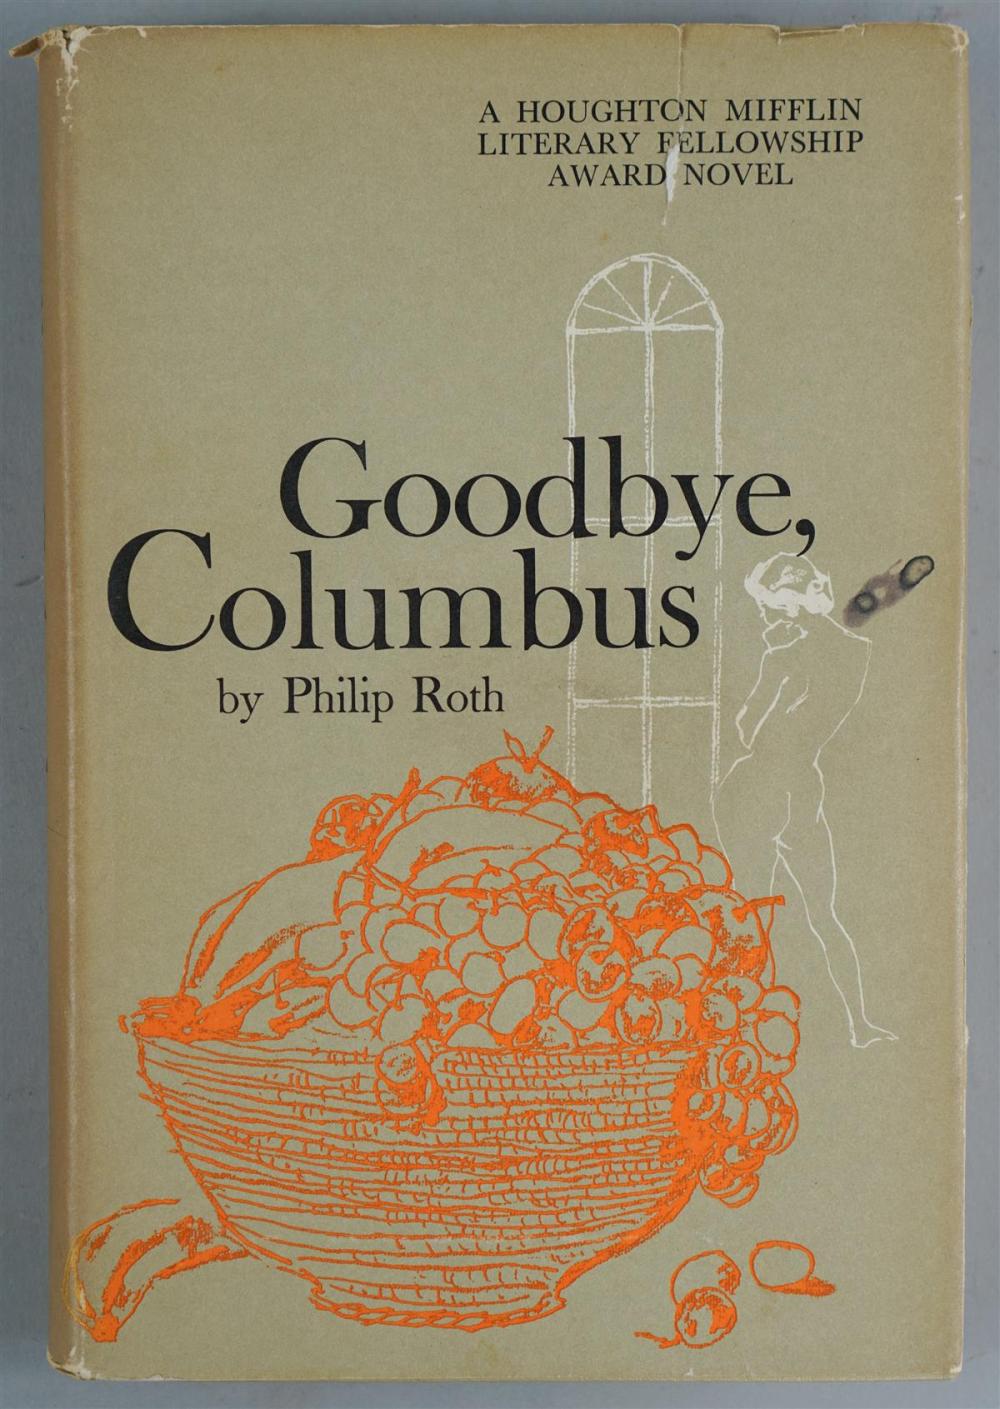 PHILIP ROTH. 'GOODBYE, COLUMBUS'PHILIP